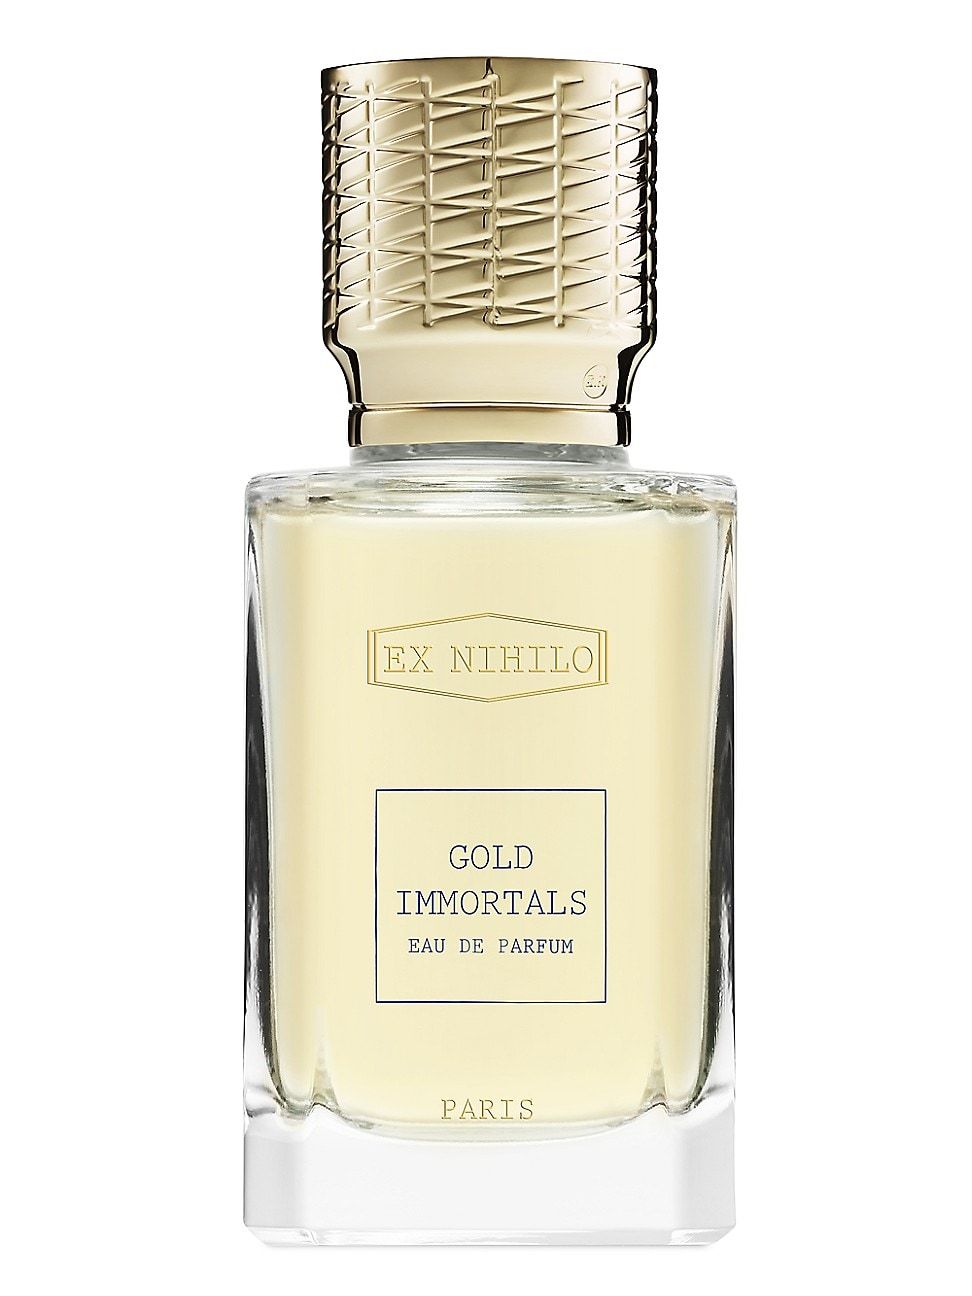 Ex Nihilo Gold Immortals Eau de Parfum - Size 1.7 oz. | Saks Fifth Avenue